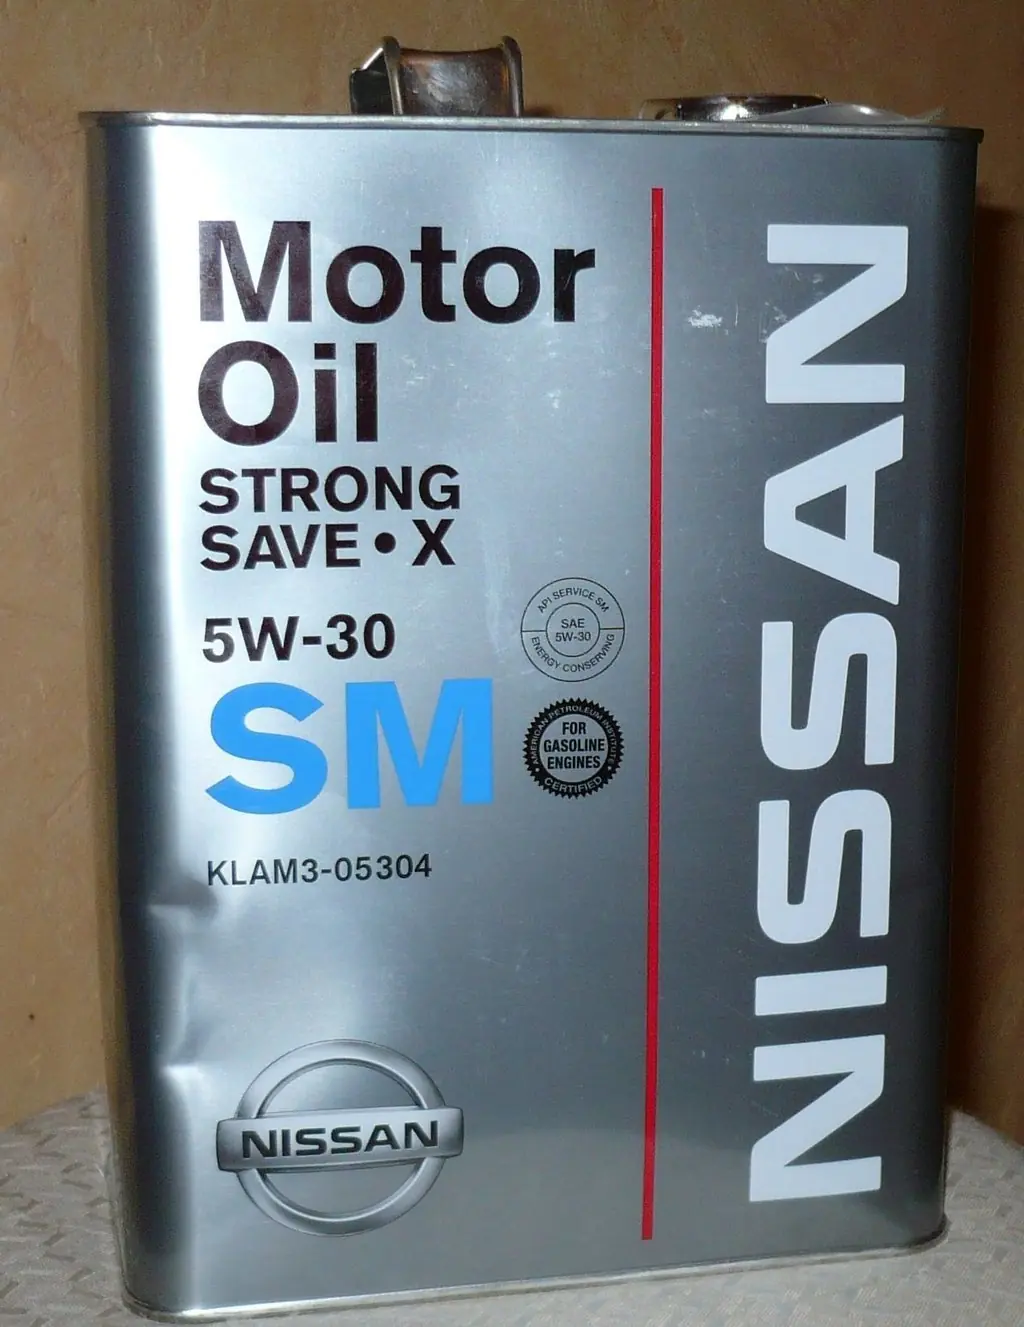 Преимущества масла Nissan SN Strong Save X 5W-30 перед конкурентами